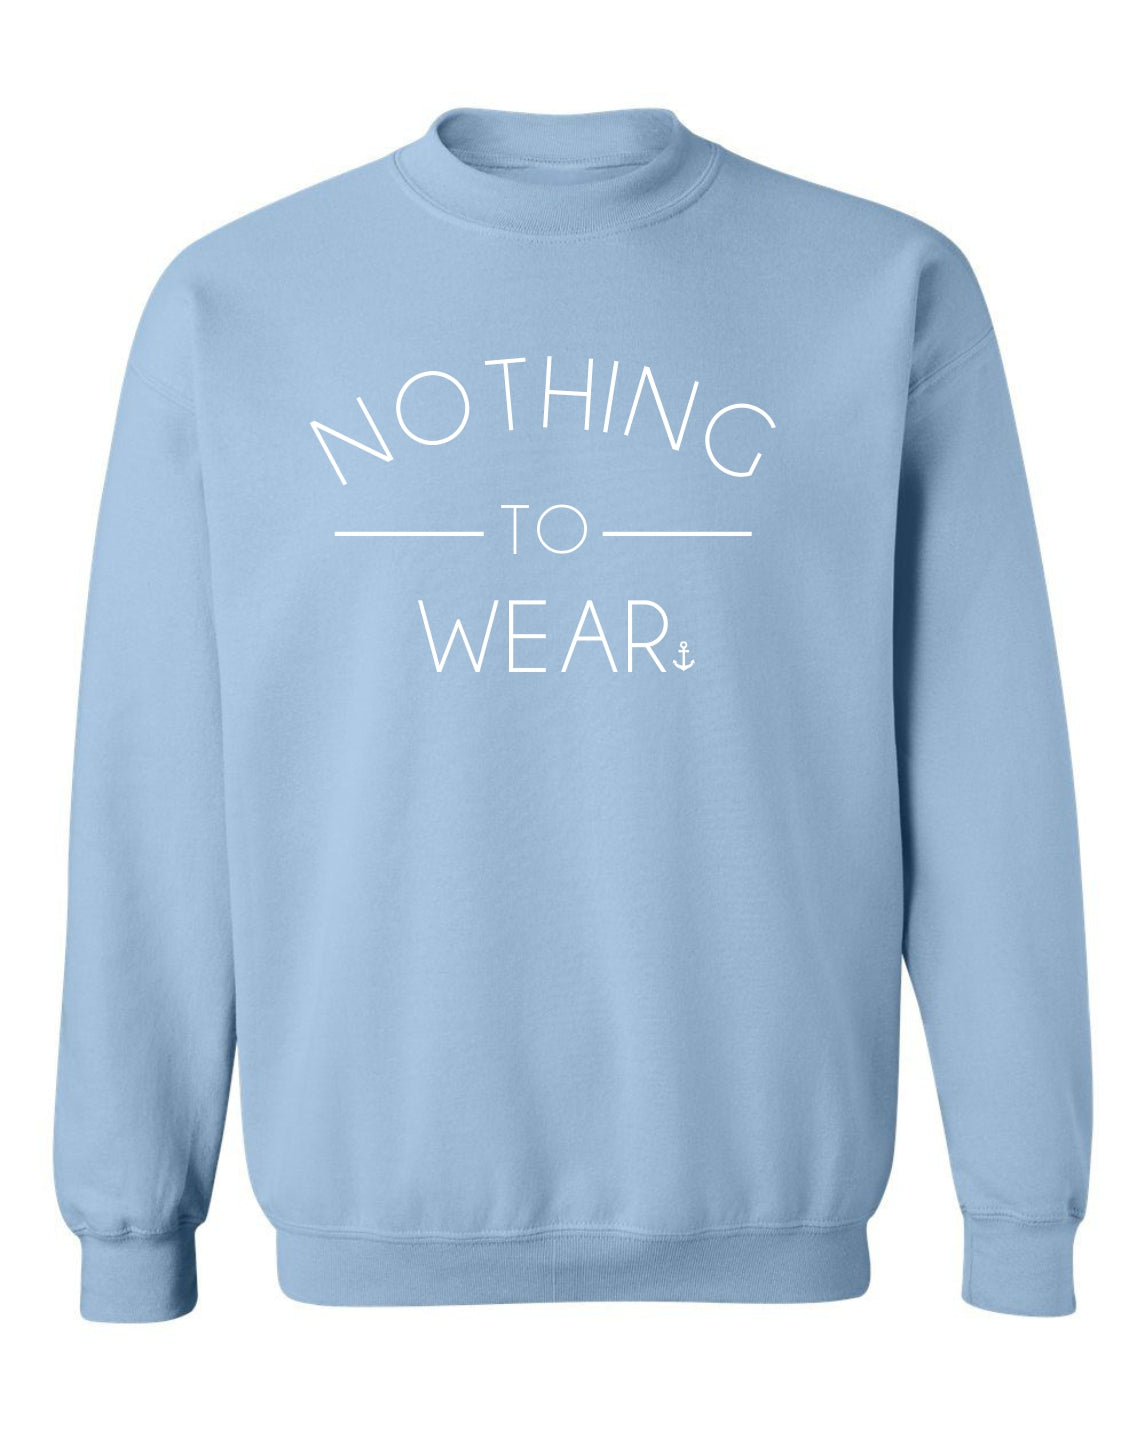 "Nothing To Wear" Unisex Crewneck Sweatshirt